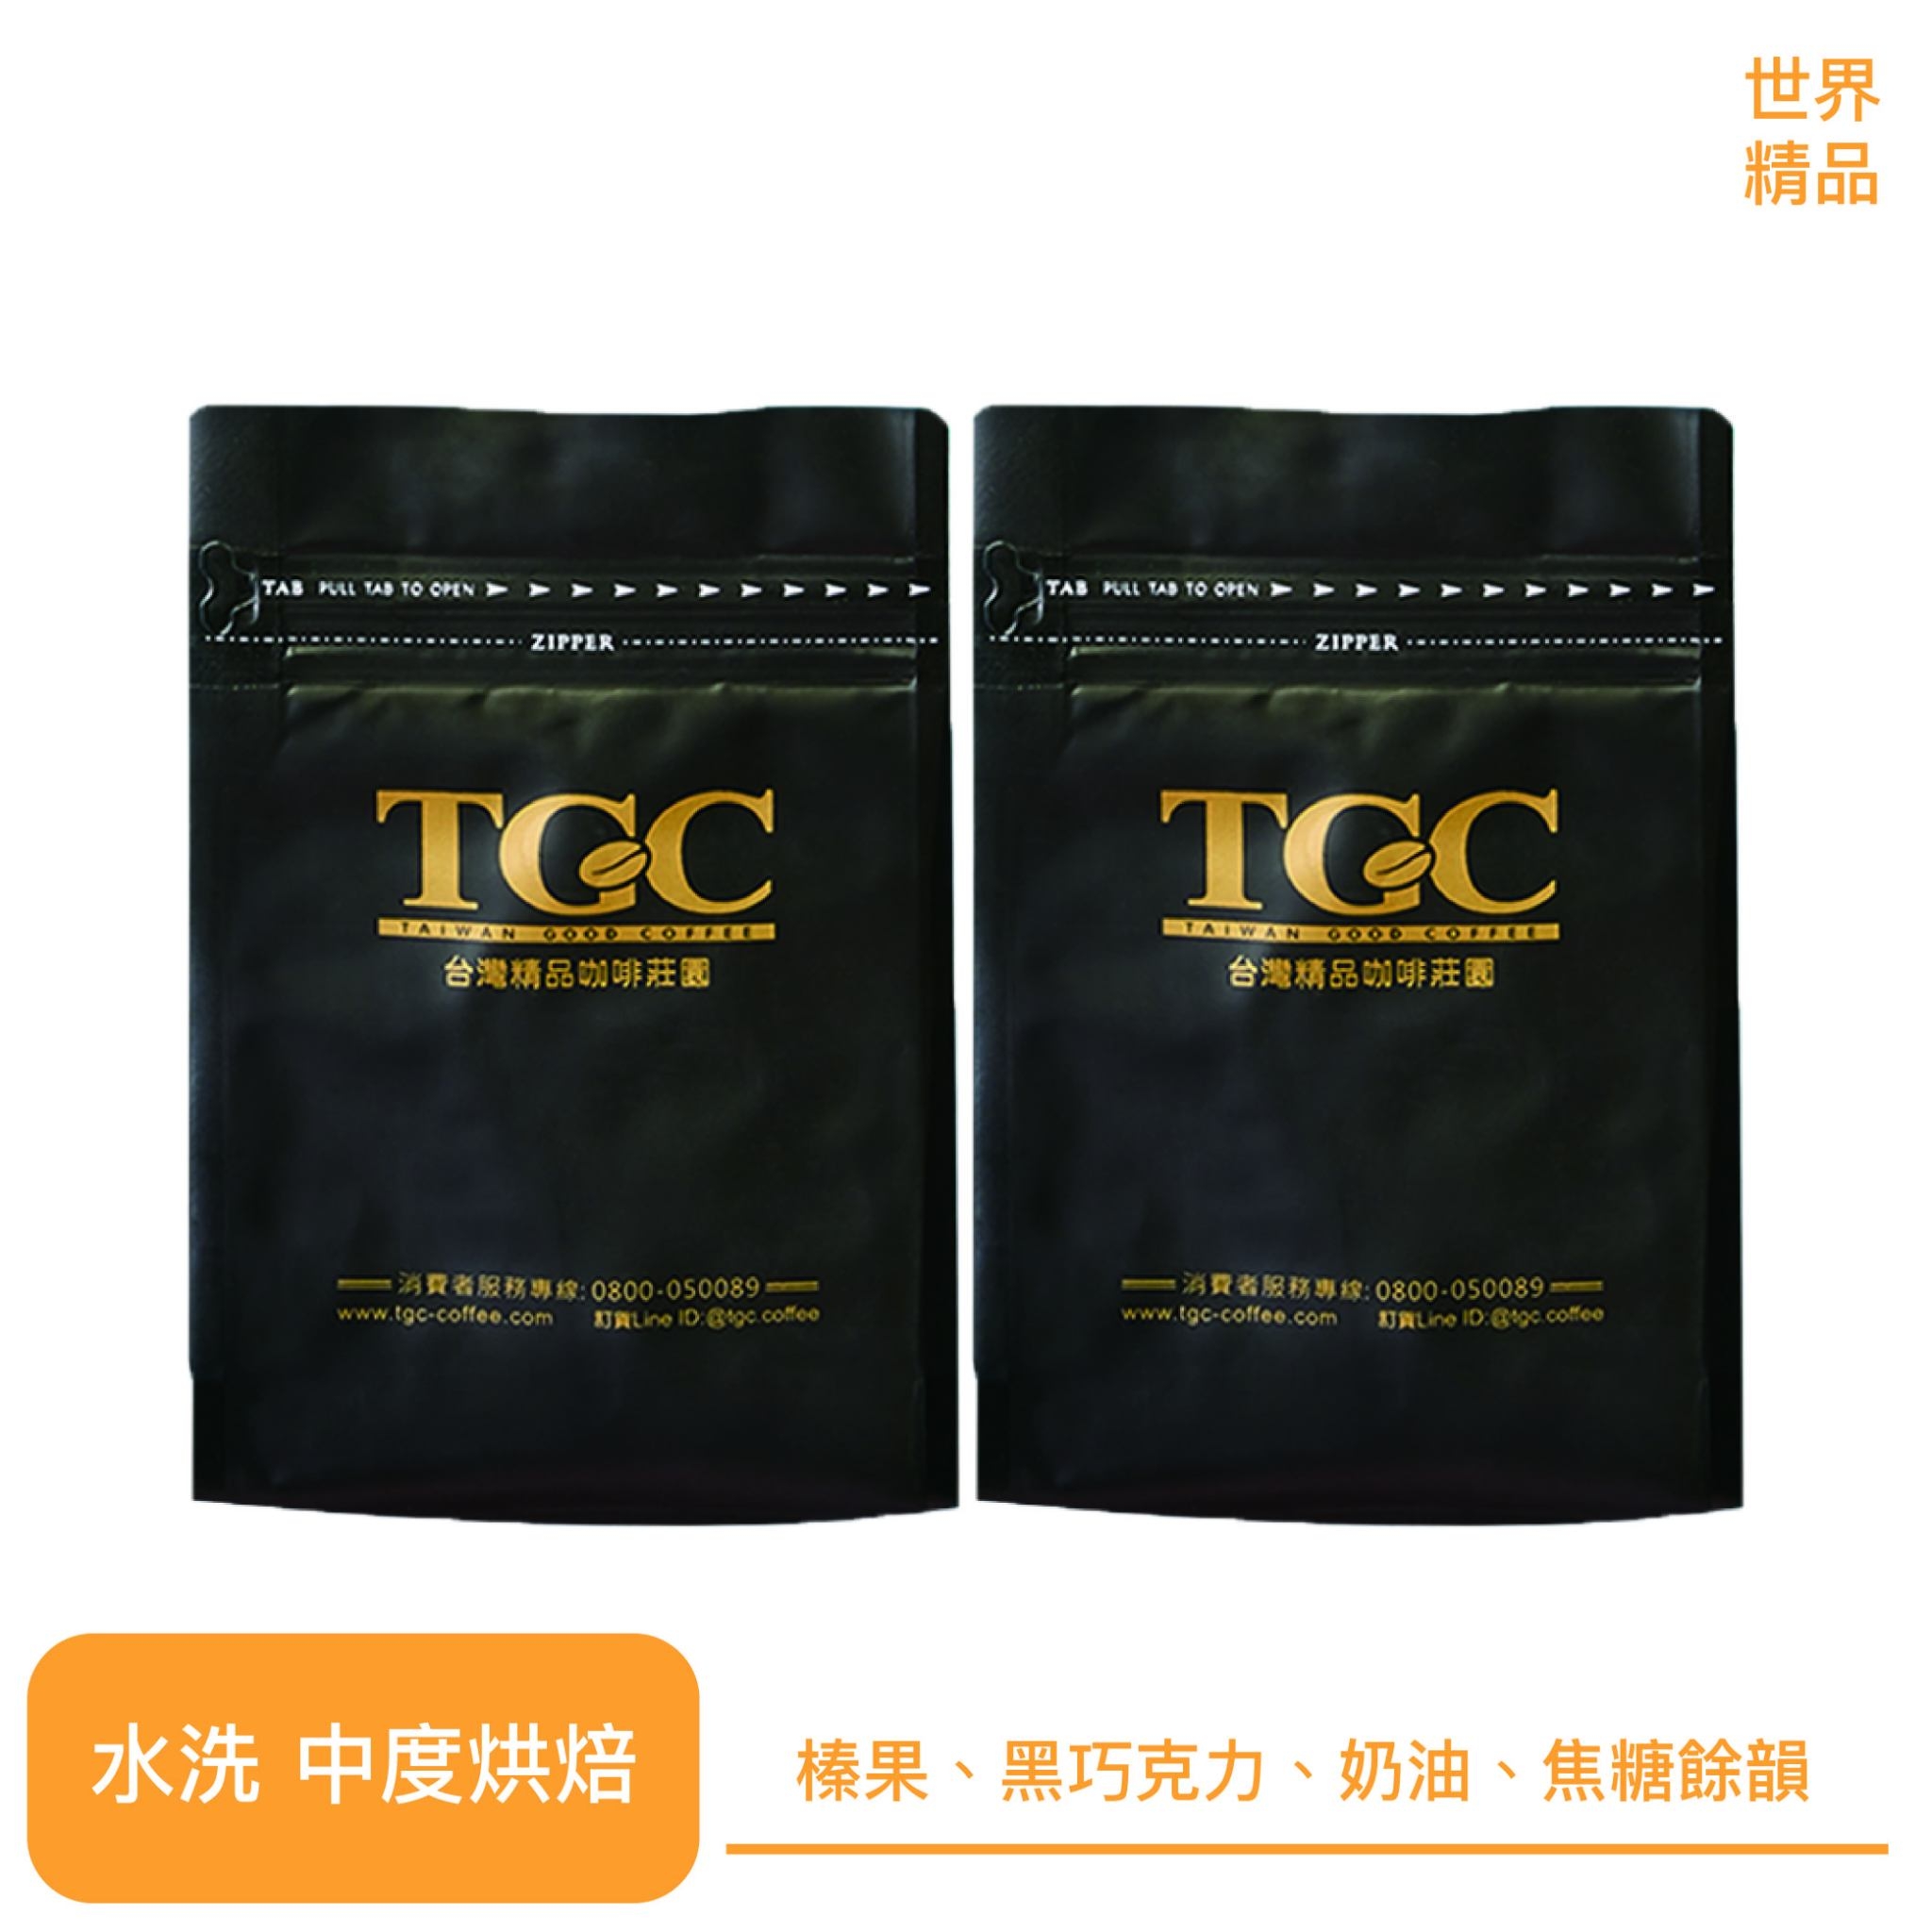 【TGC】巴拿馬 凱薩路易斯 波奎特 精選 咖啡豆 227g*2包